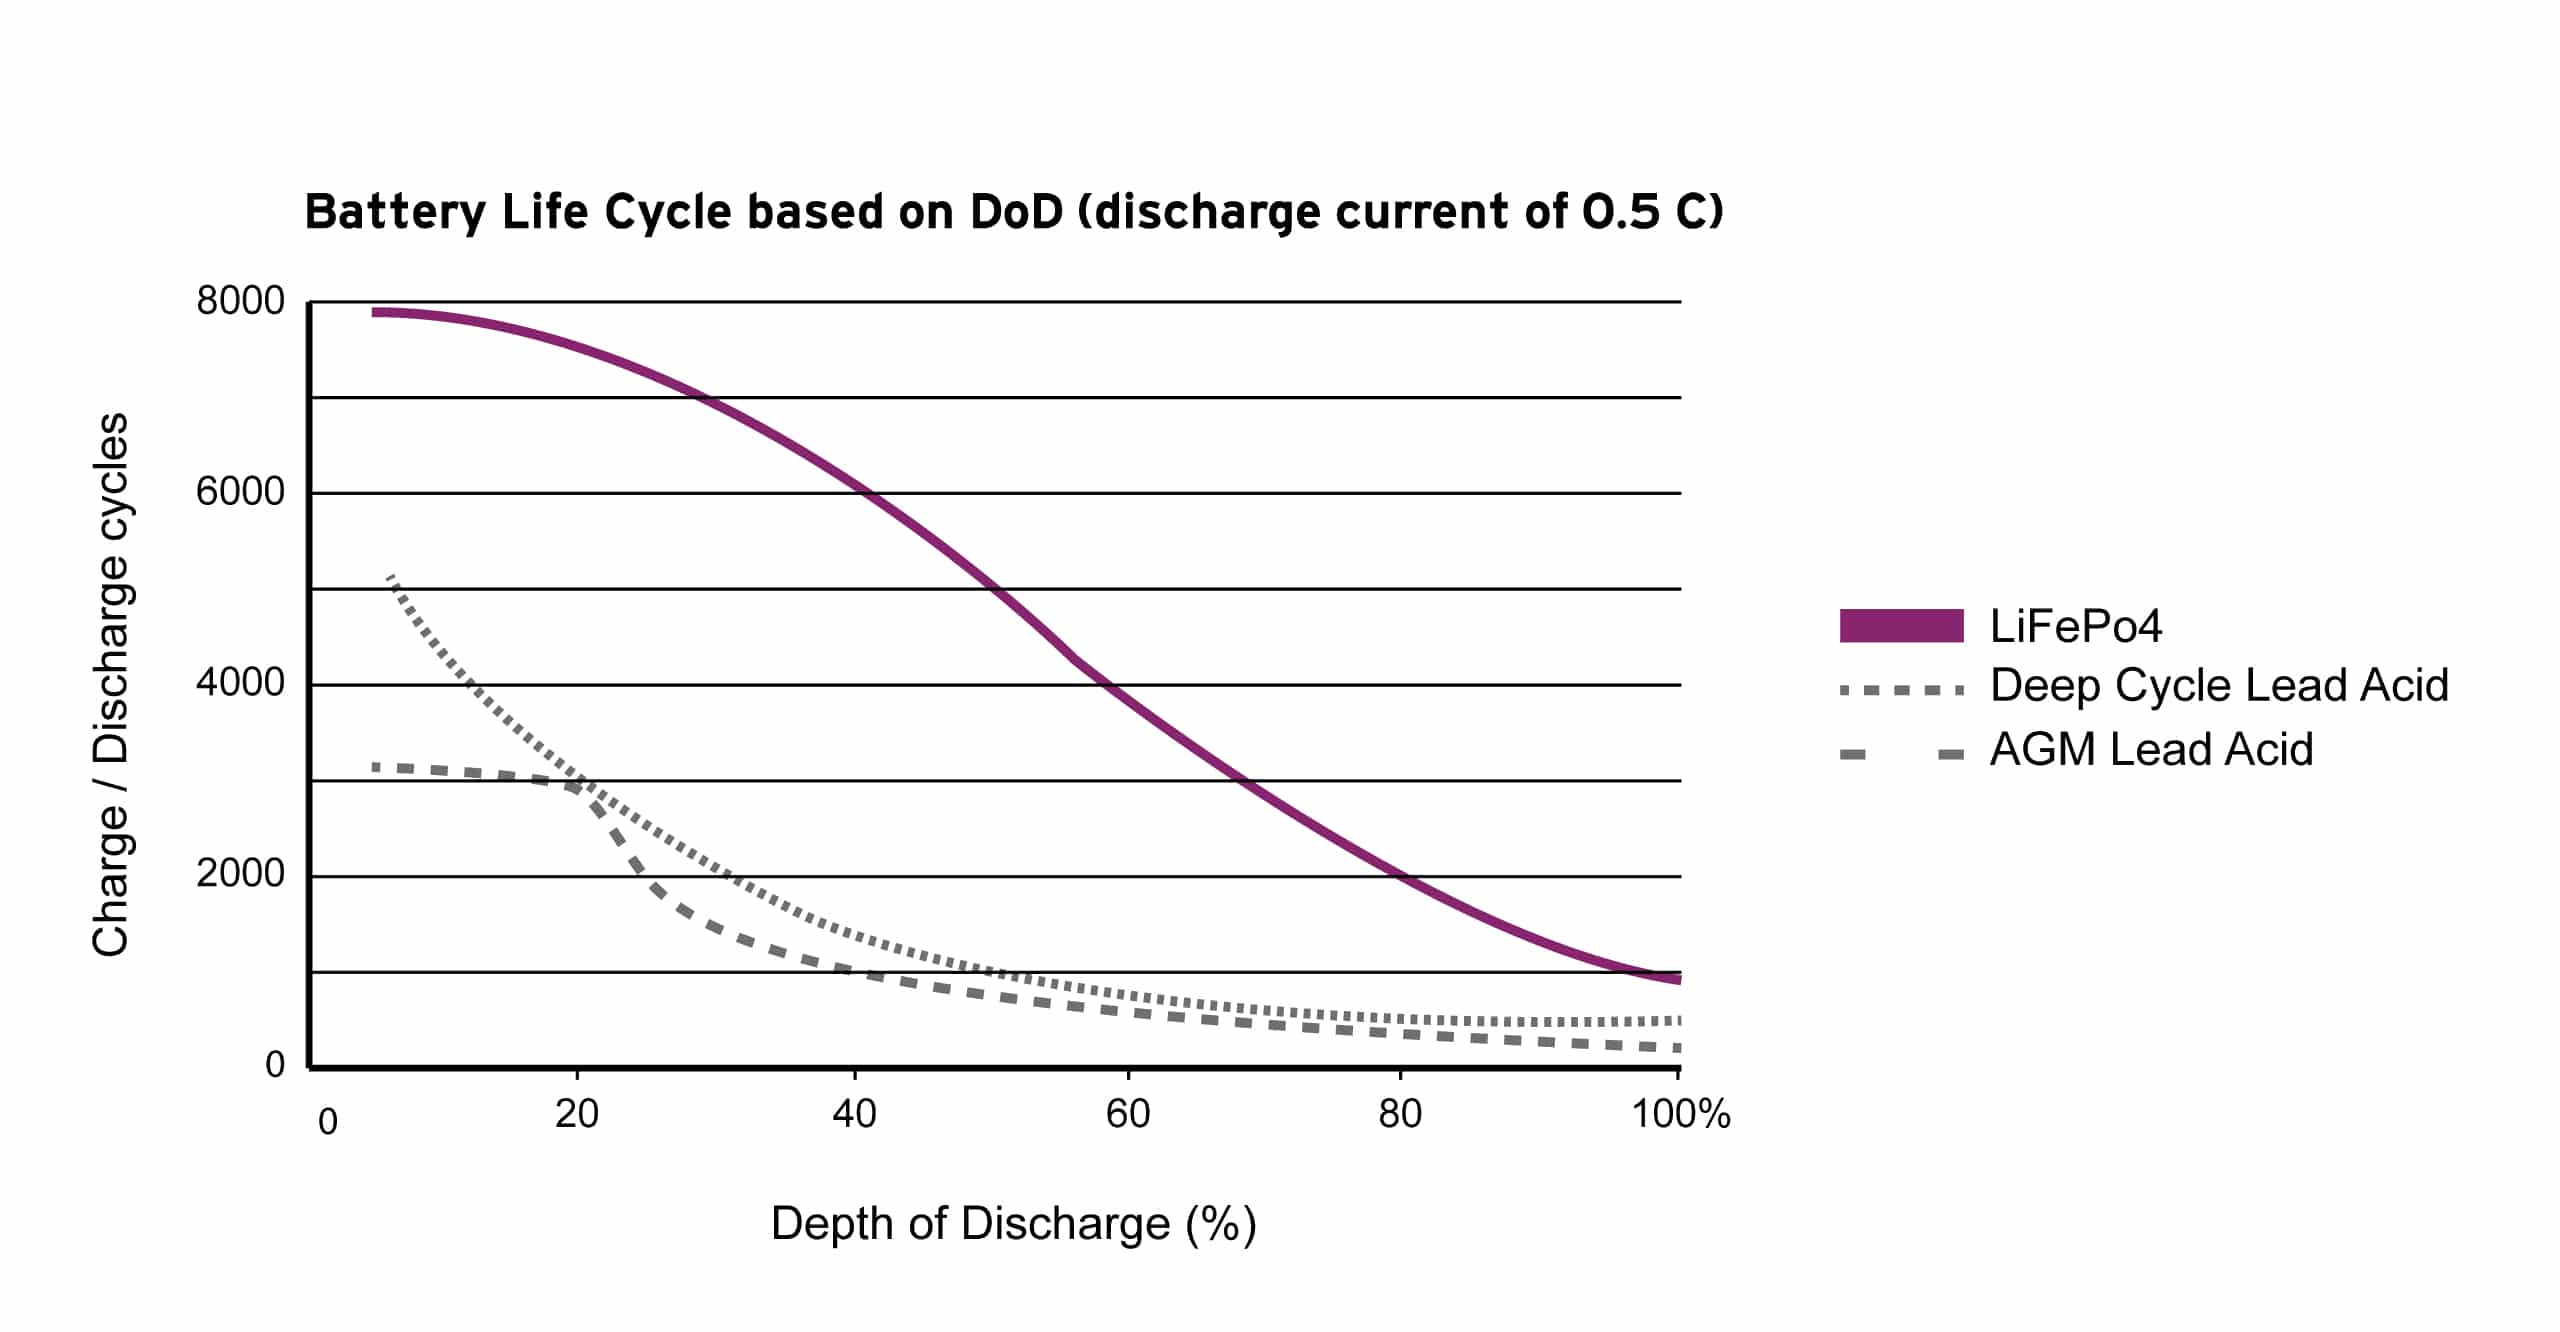 Battery life cycles versus Depth of Discharge